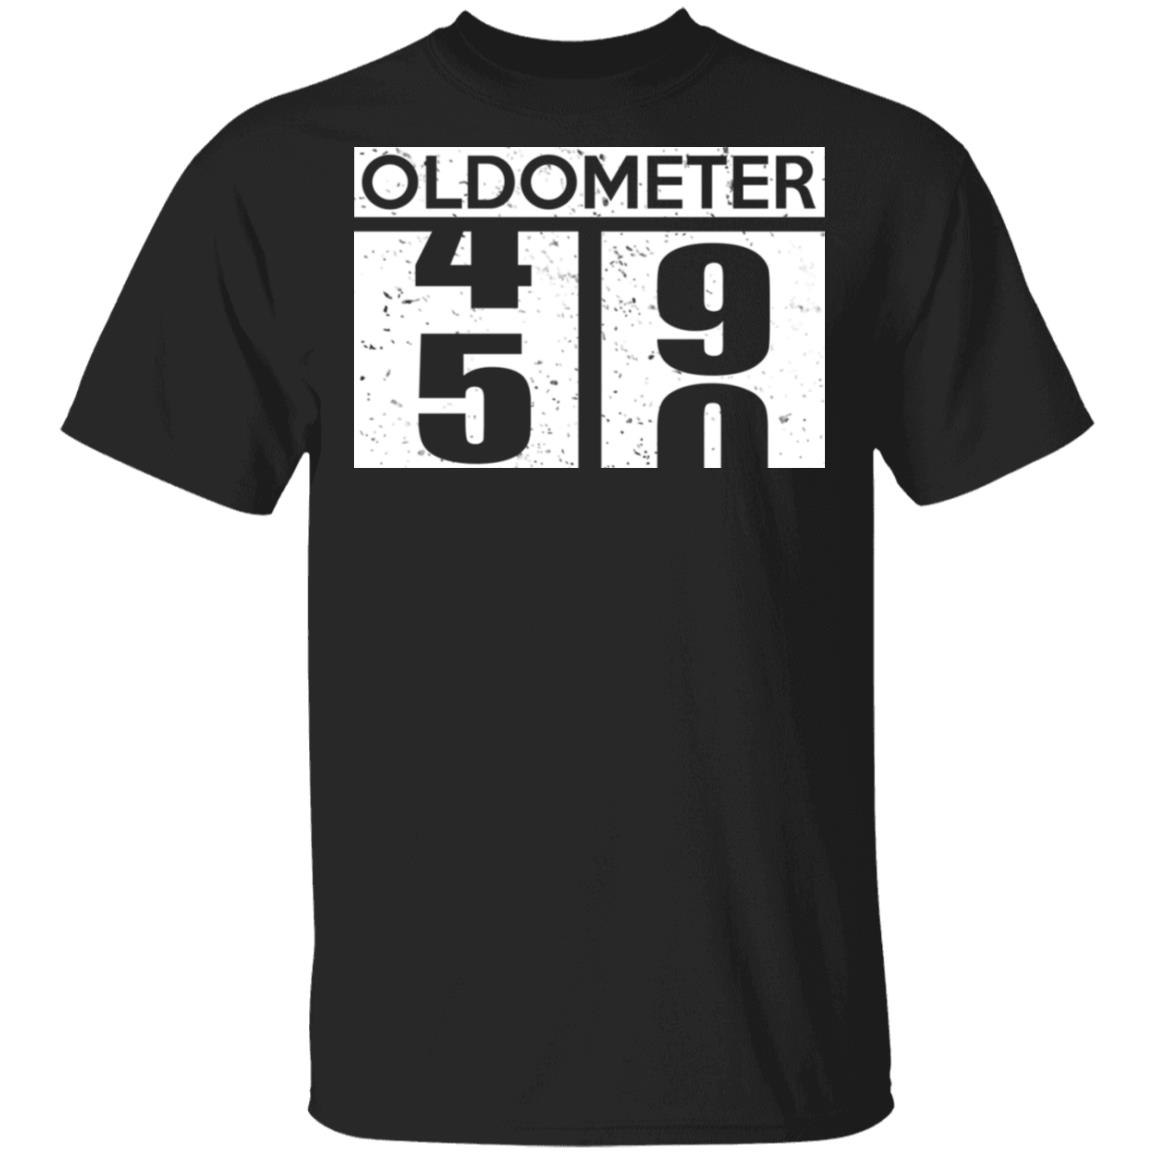 Oldometer 45 90 Shirt | El Real Tex-Mex